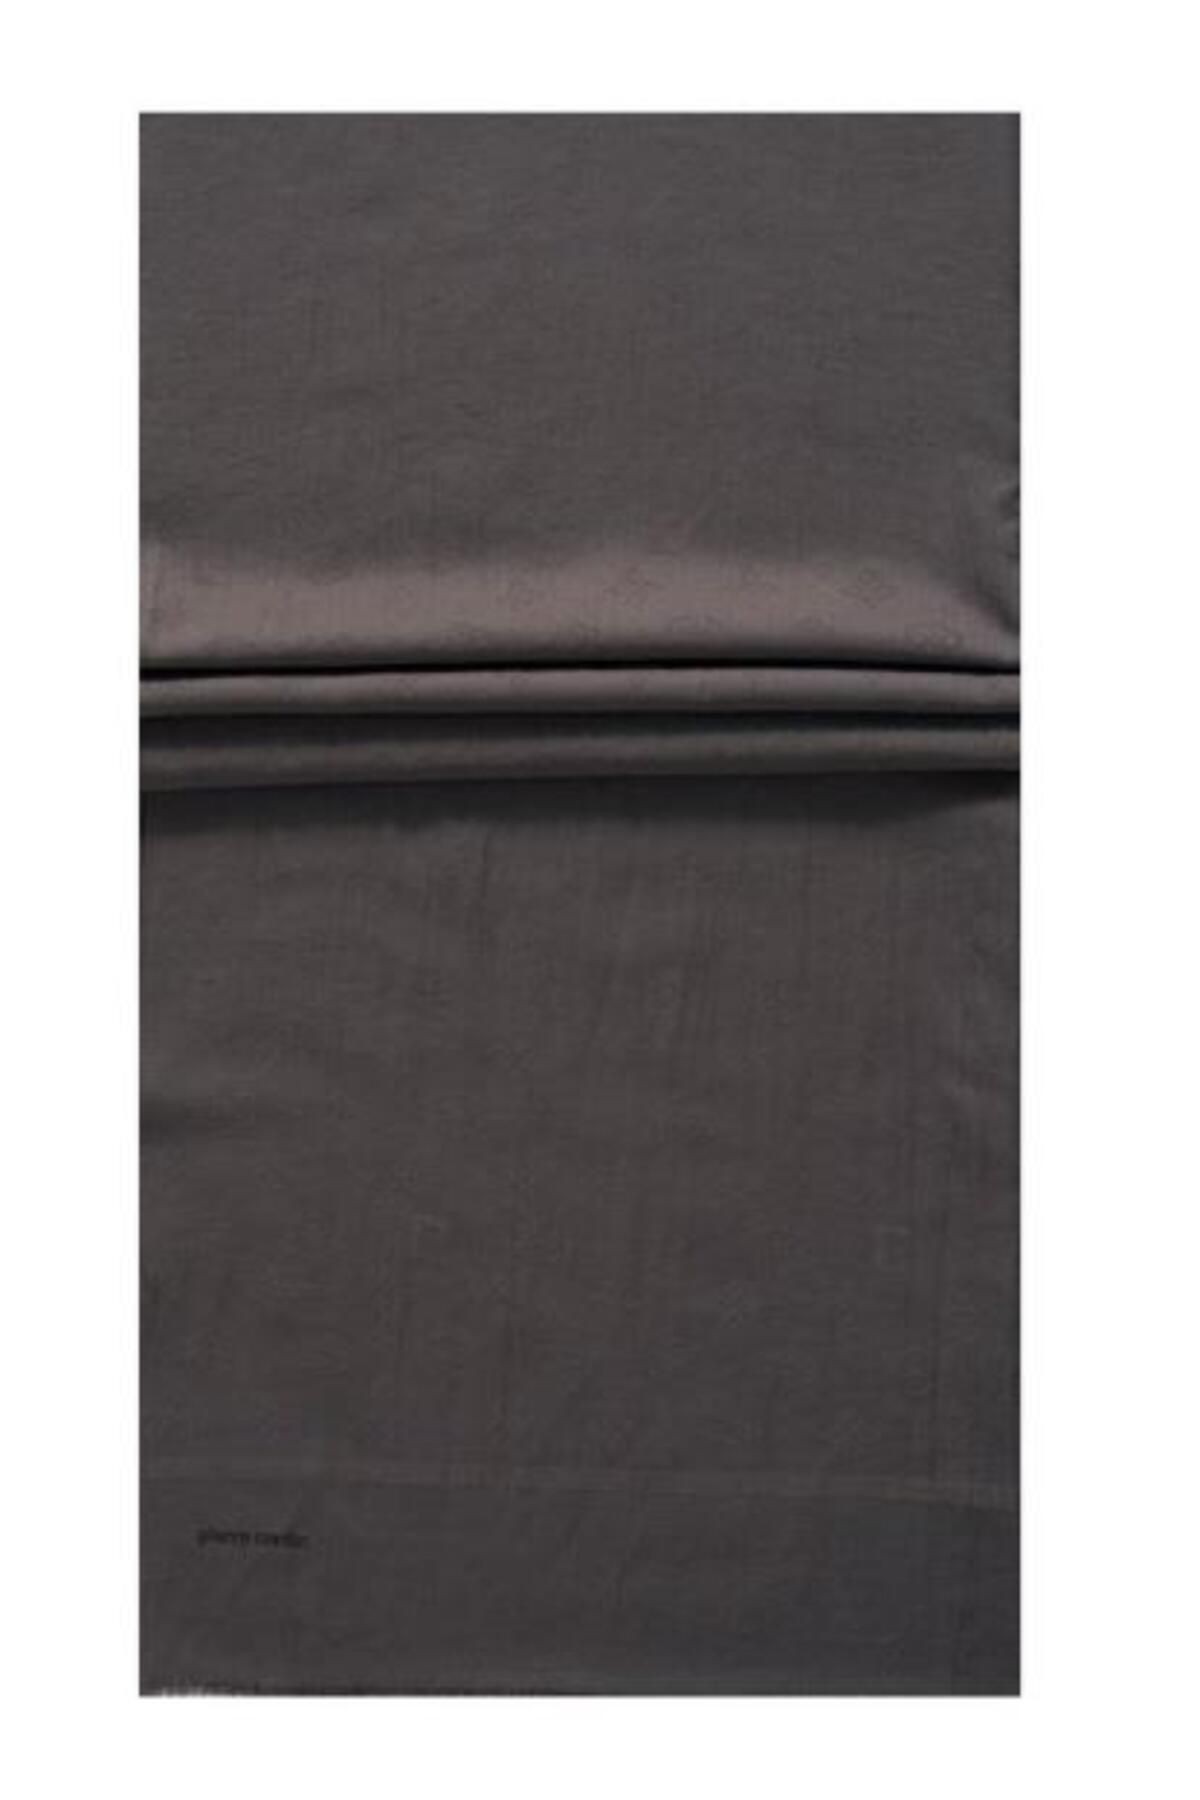 Pierre Cardin 75 x200 Kahverengi Cotton (PAMUK) Şal 1030600-975